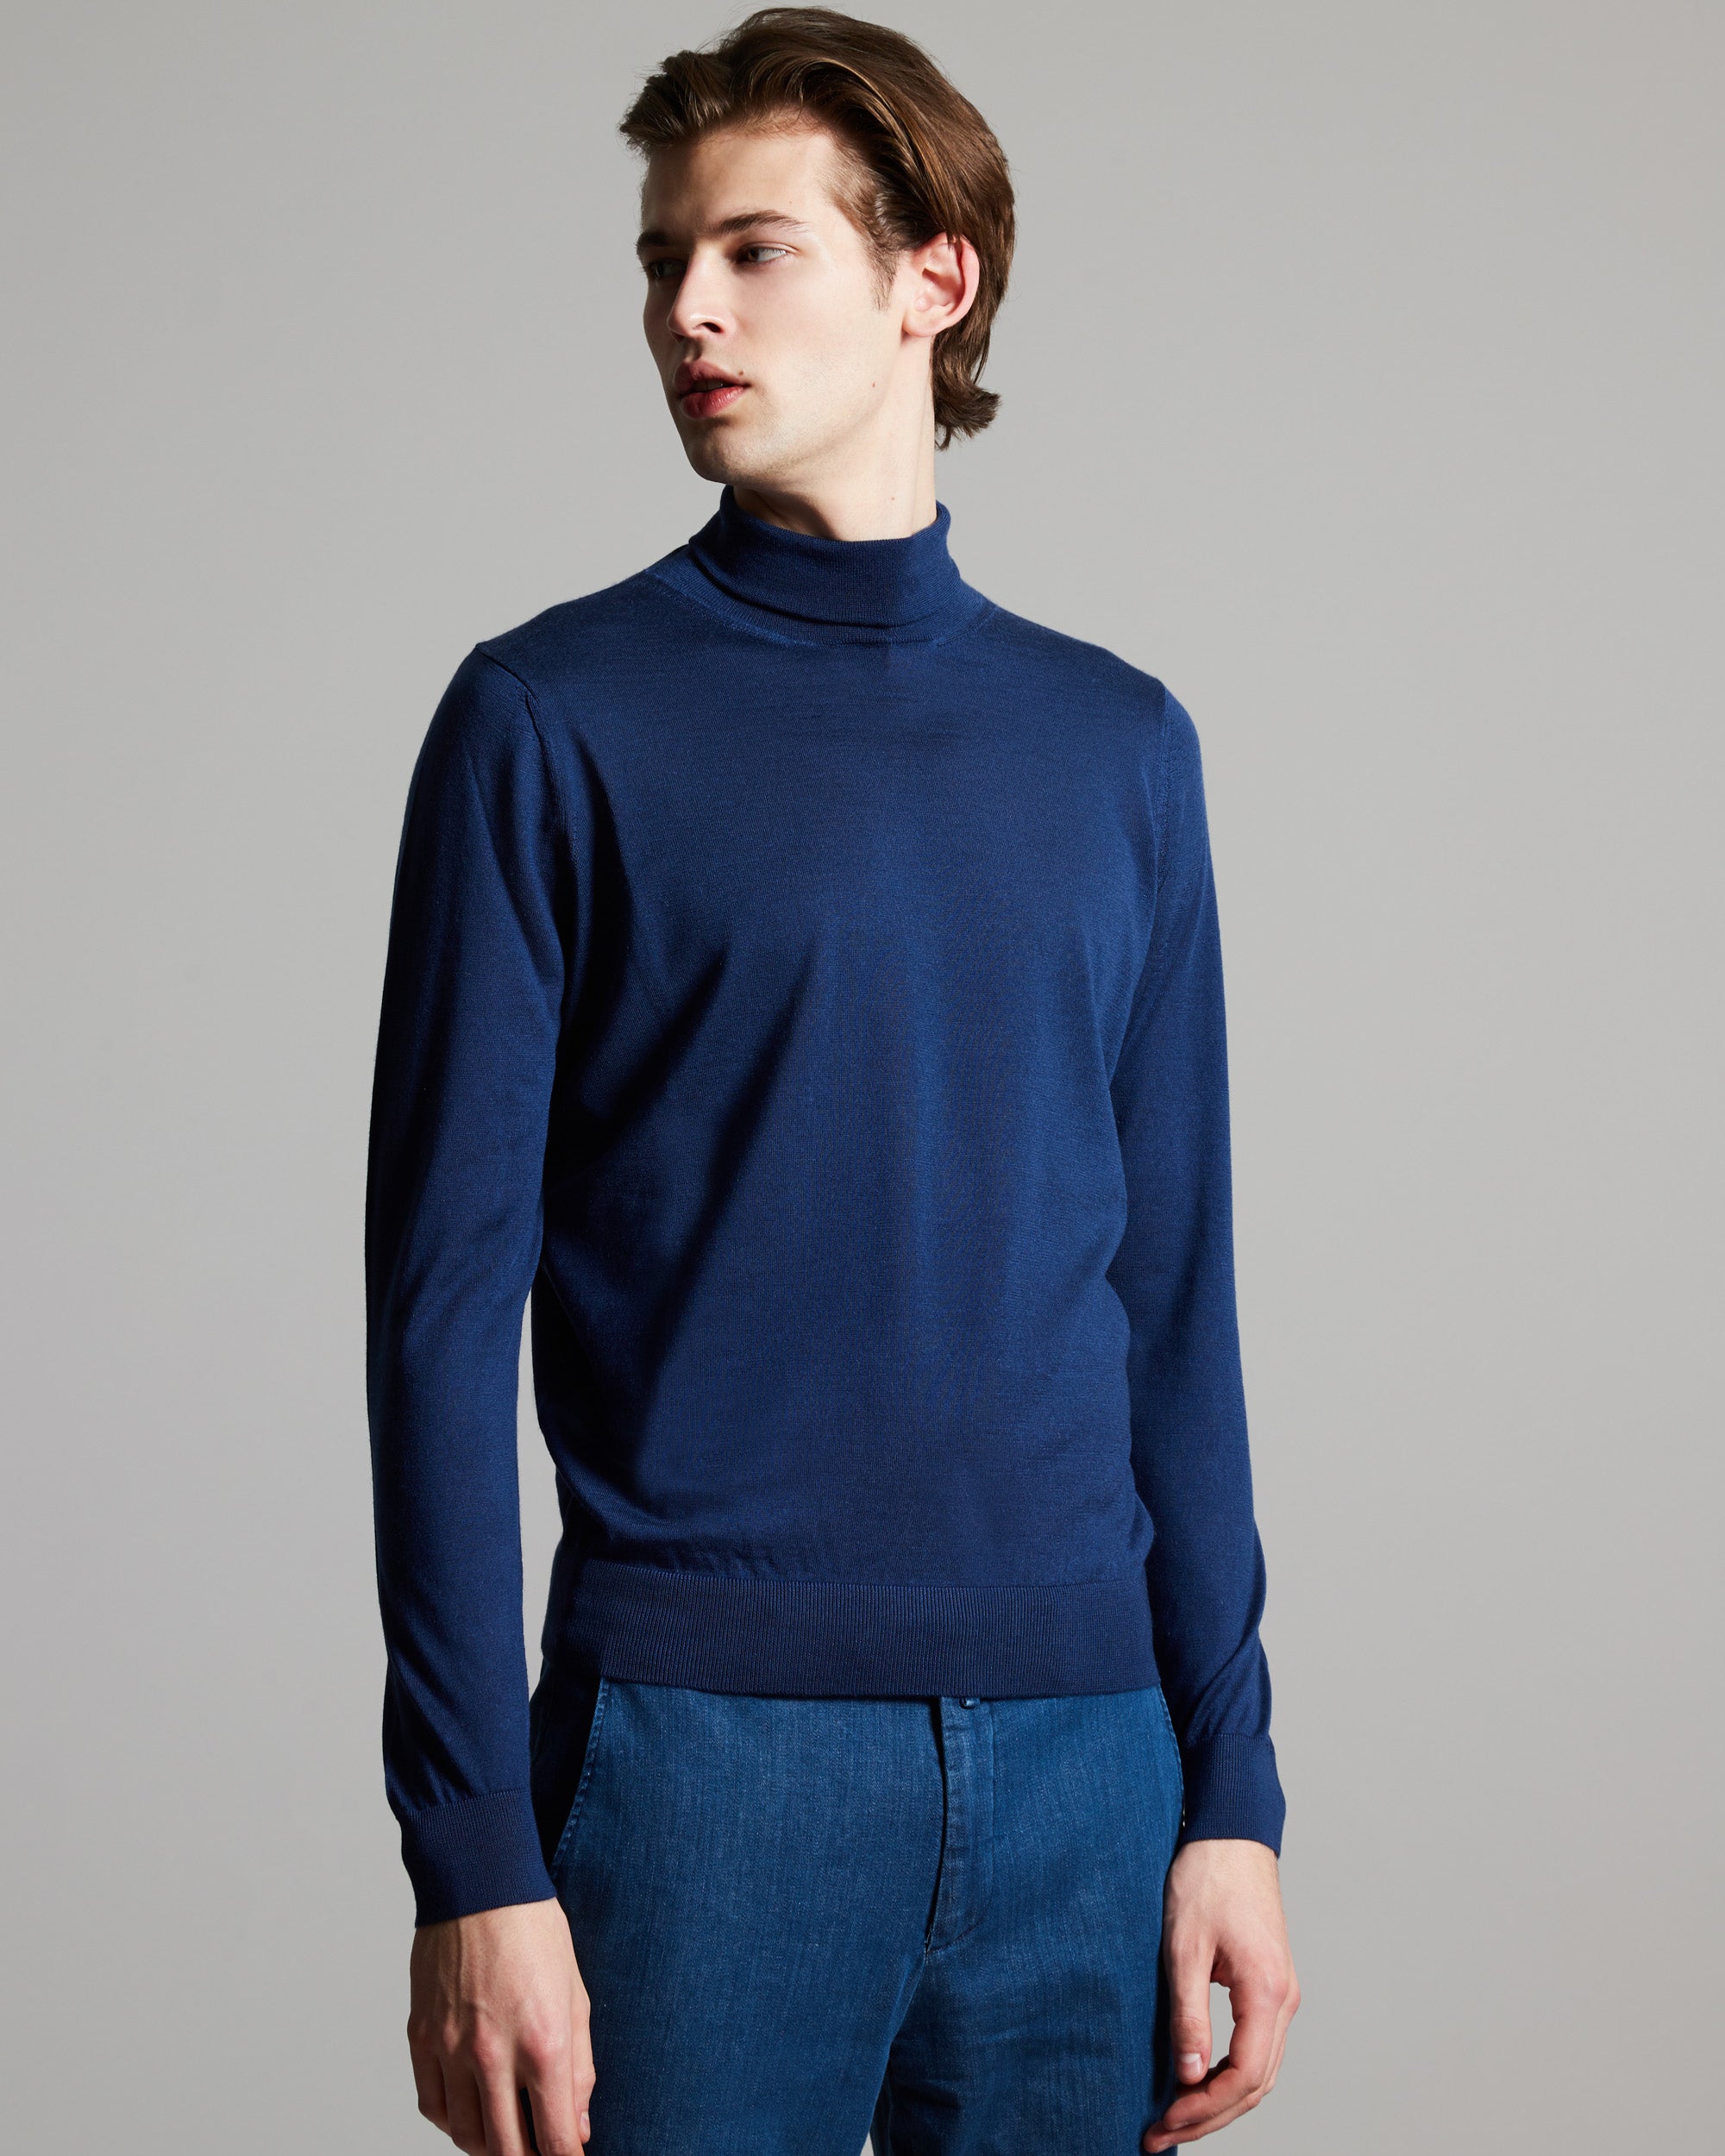 Blue cashmere and silk men's turtleneck sweater